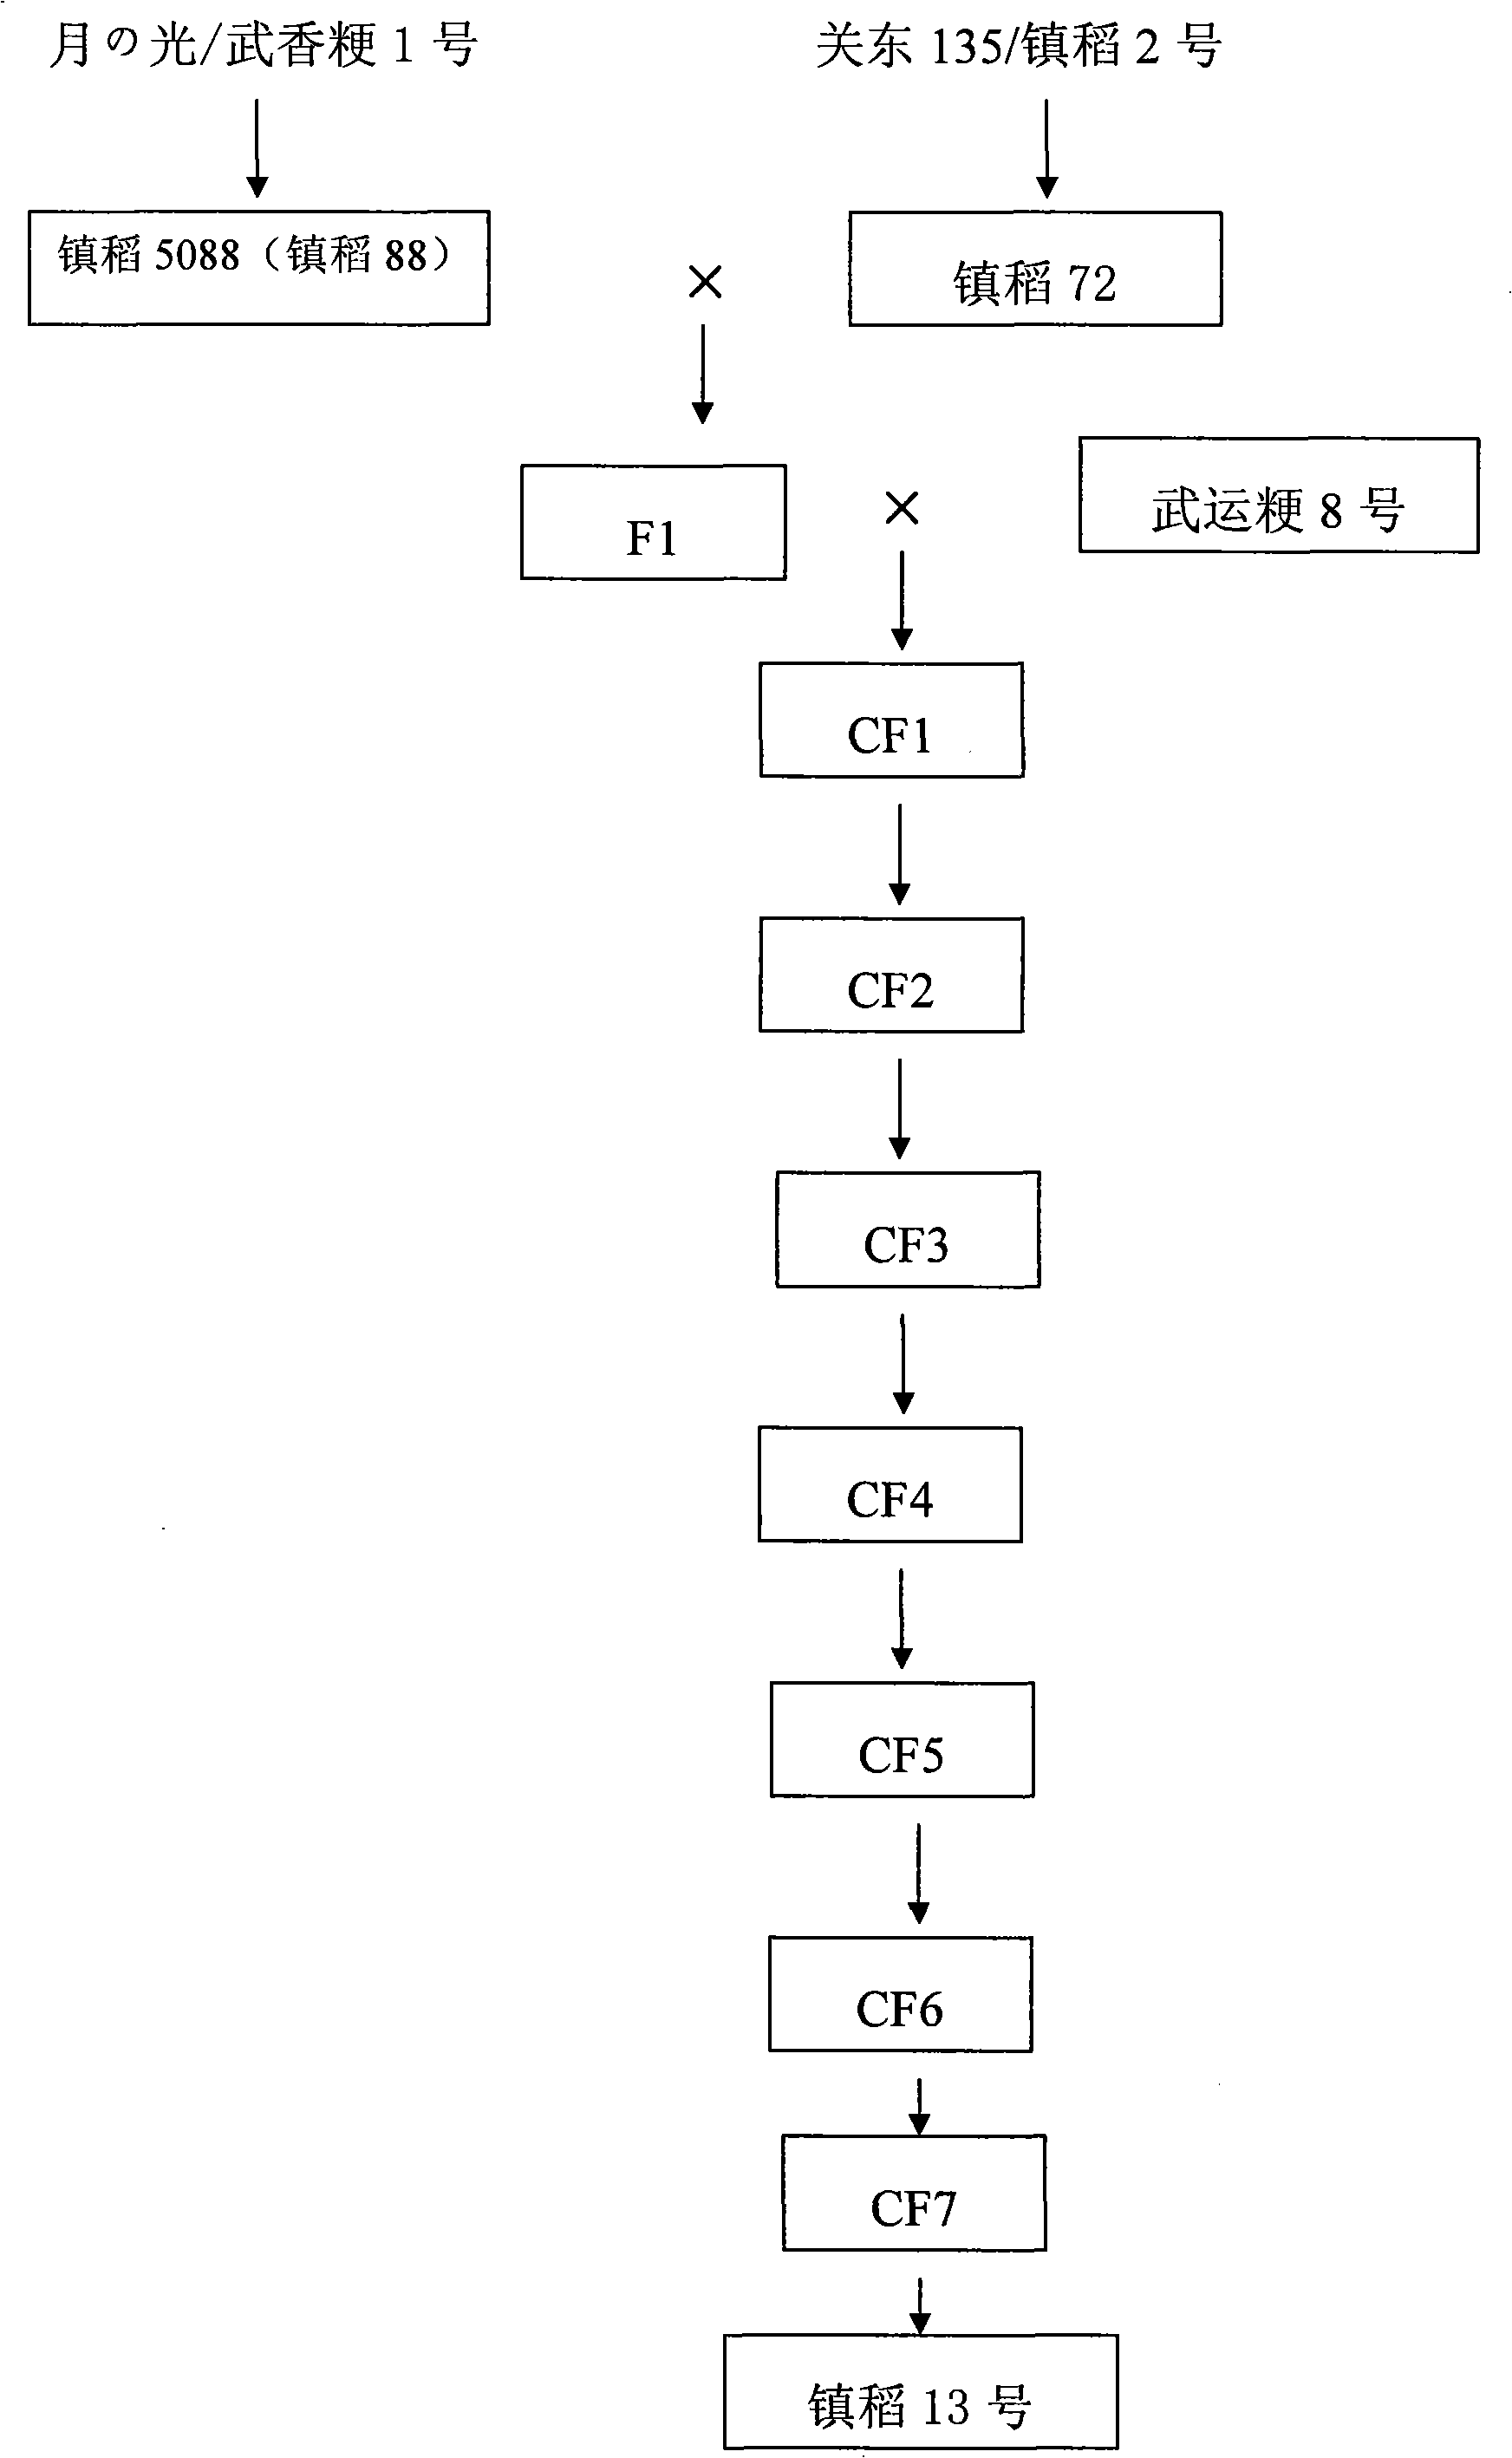 Method for breeding Zhen dao No. 13 using ladder polymerization improved technique